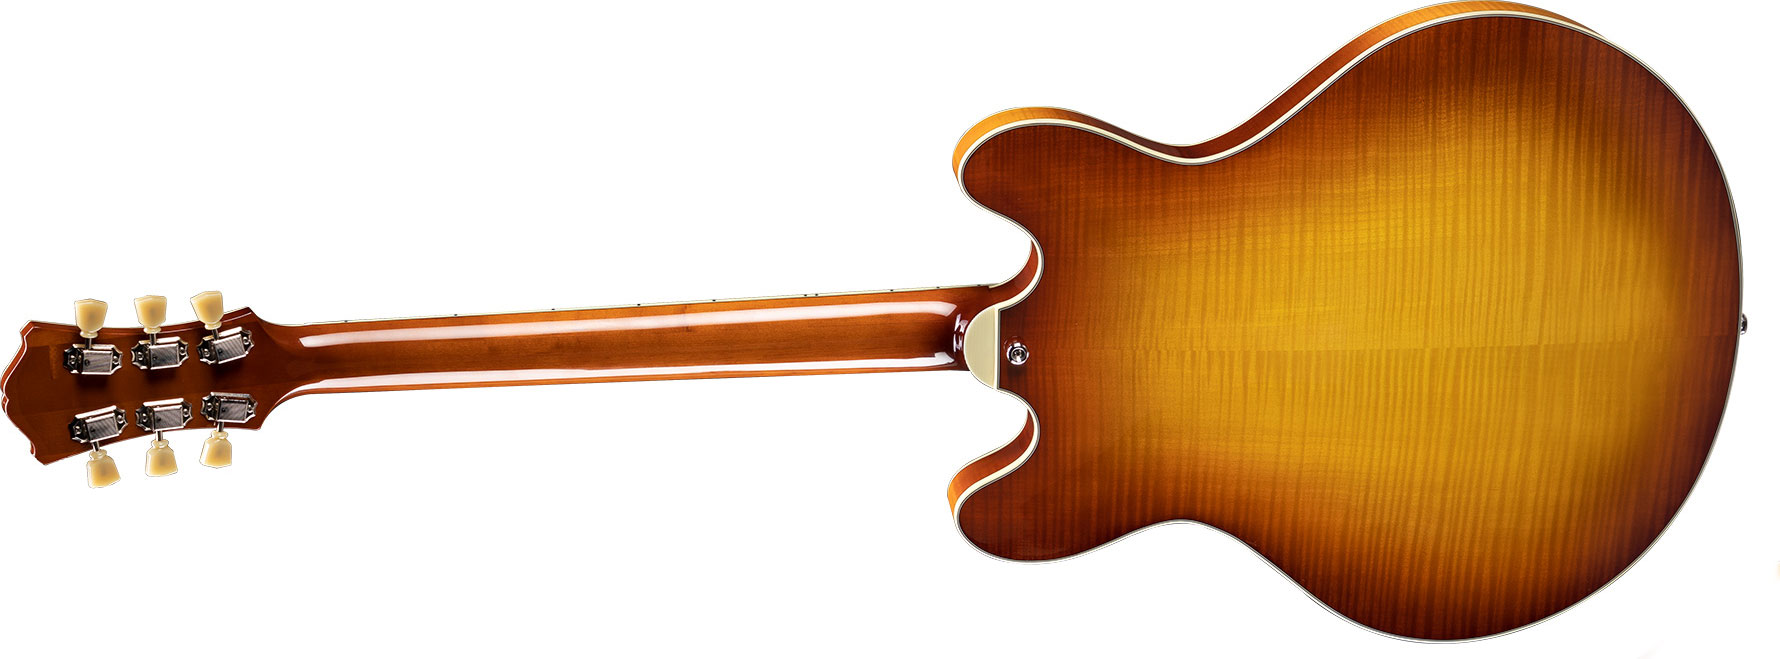 Eastman T486 Thinline Laminate Tout Erable Hh Seymour Duncan Ht Eb - Goldburst - Semi hollow elektriche gitaar - Variation 1